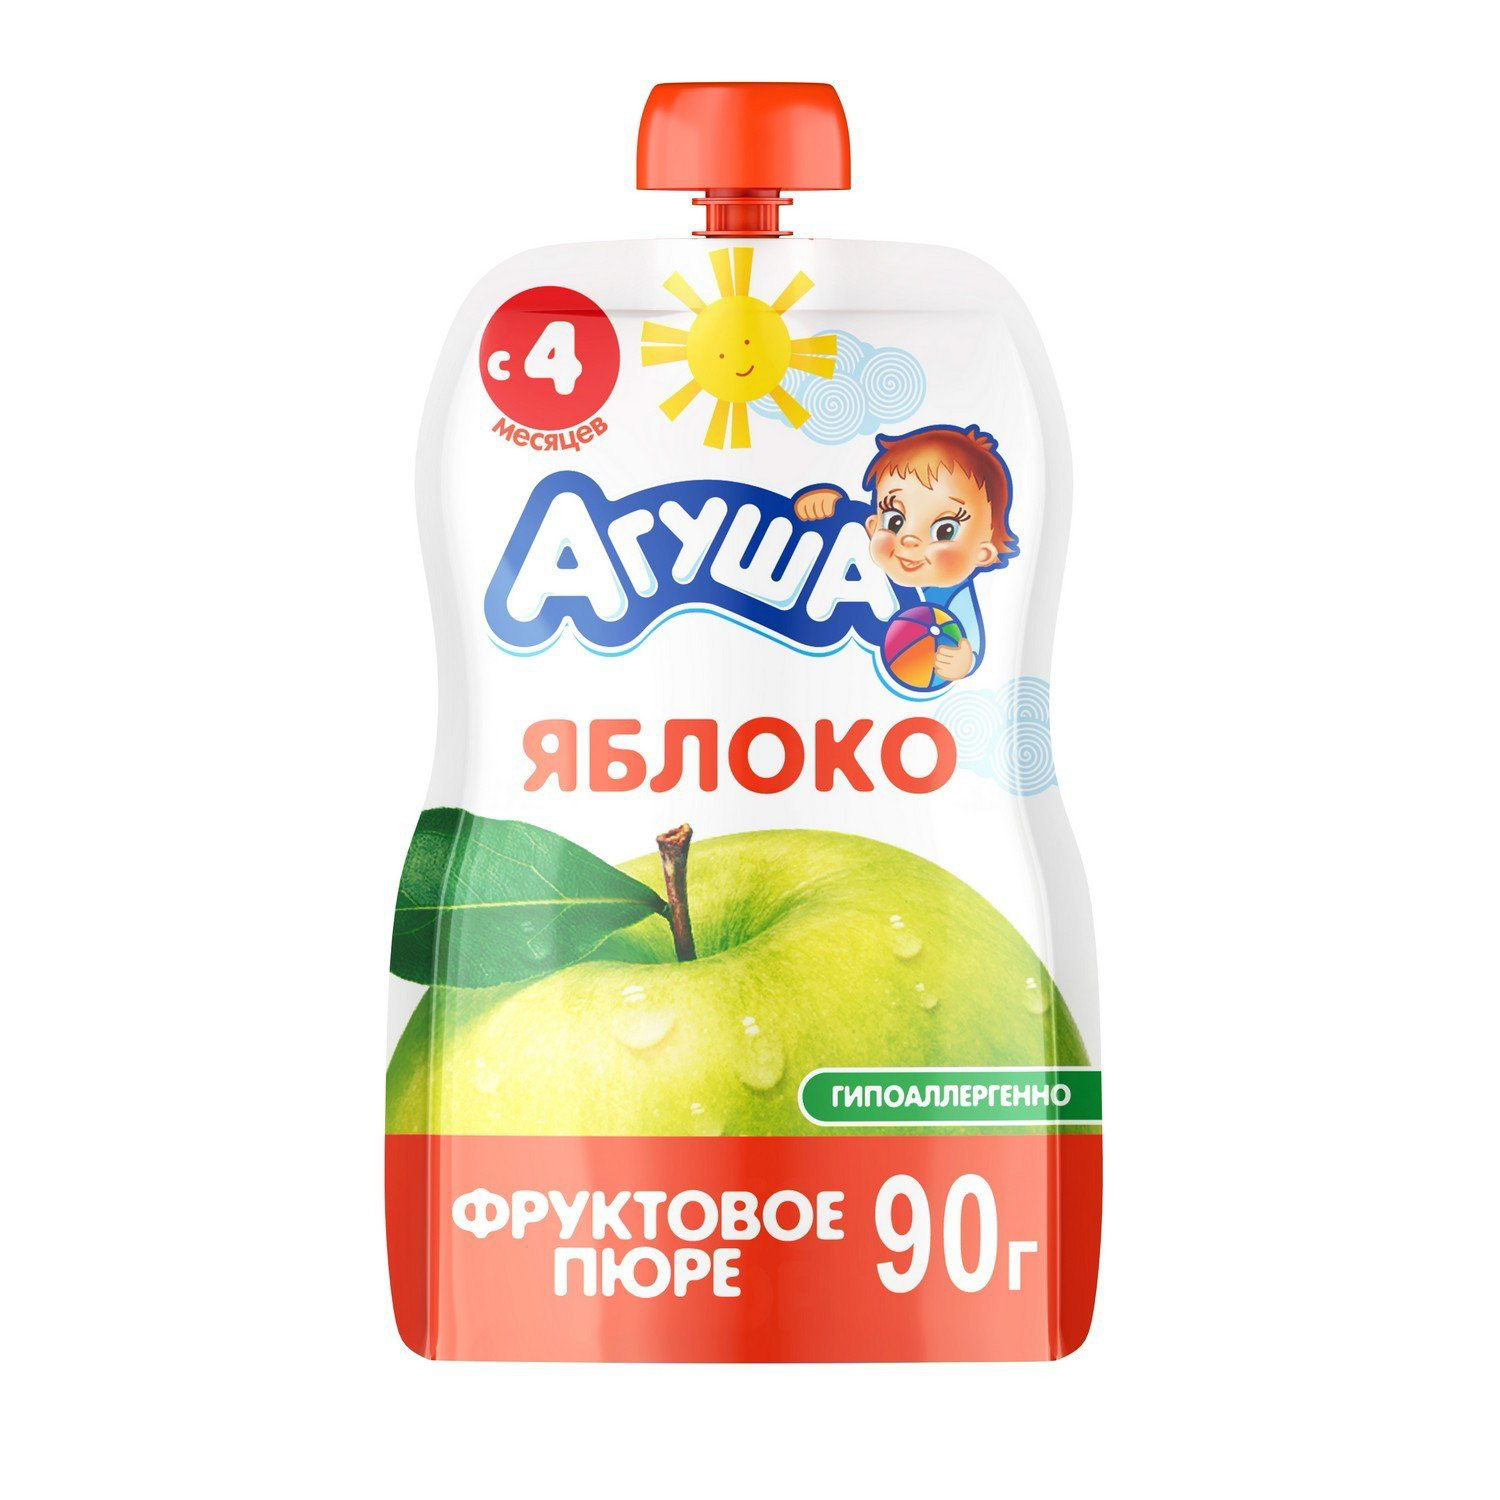 Пюре фруктовое Агуша Яблоко 90 г пюре фруктовое агуша яблоко с 4 месяцев 90 г